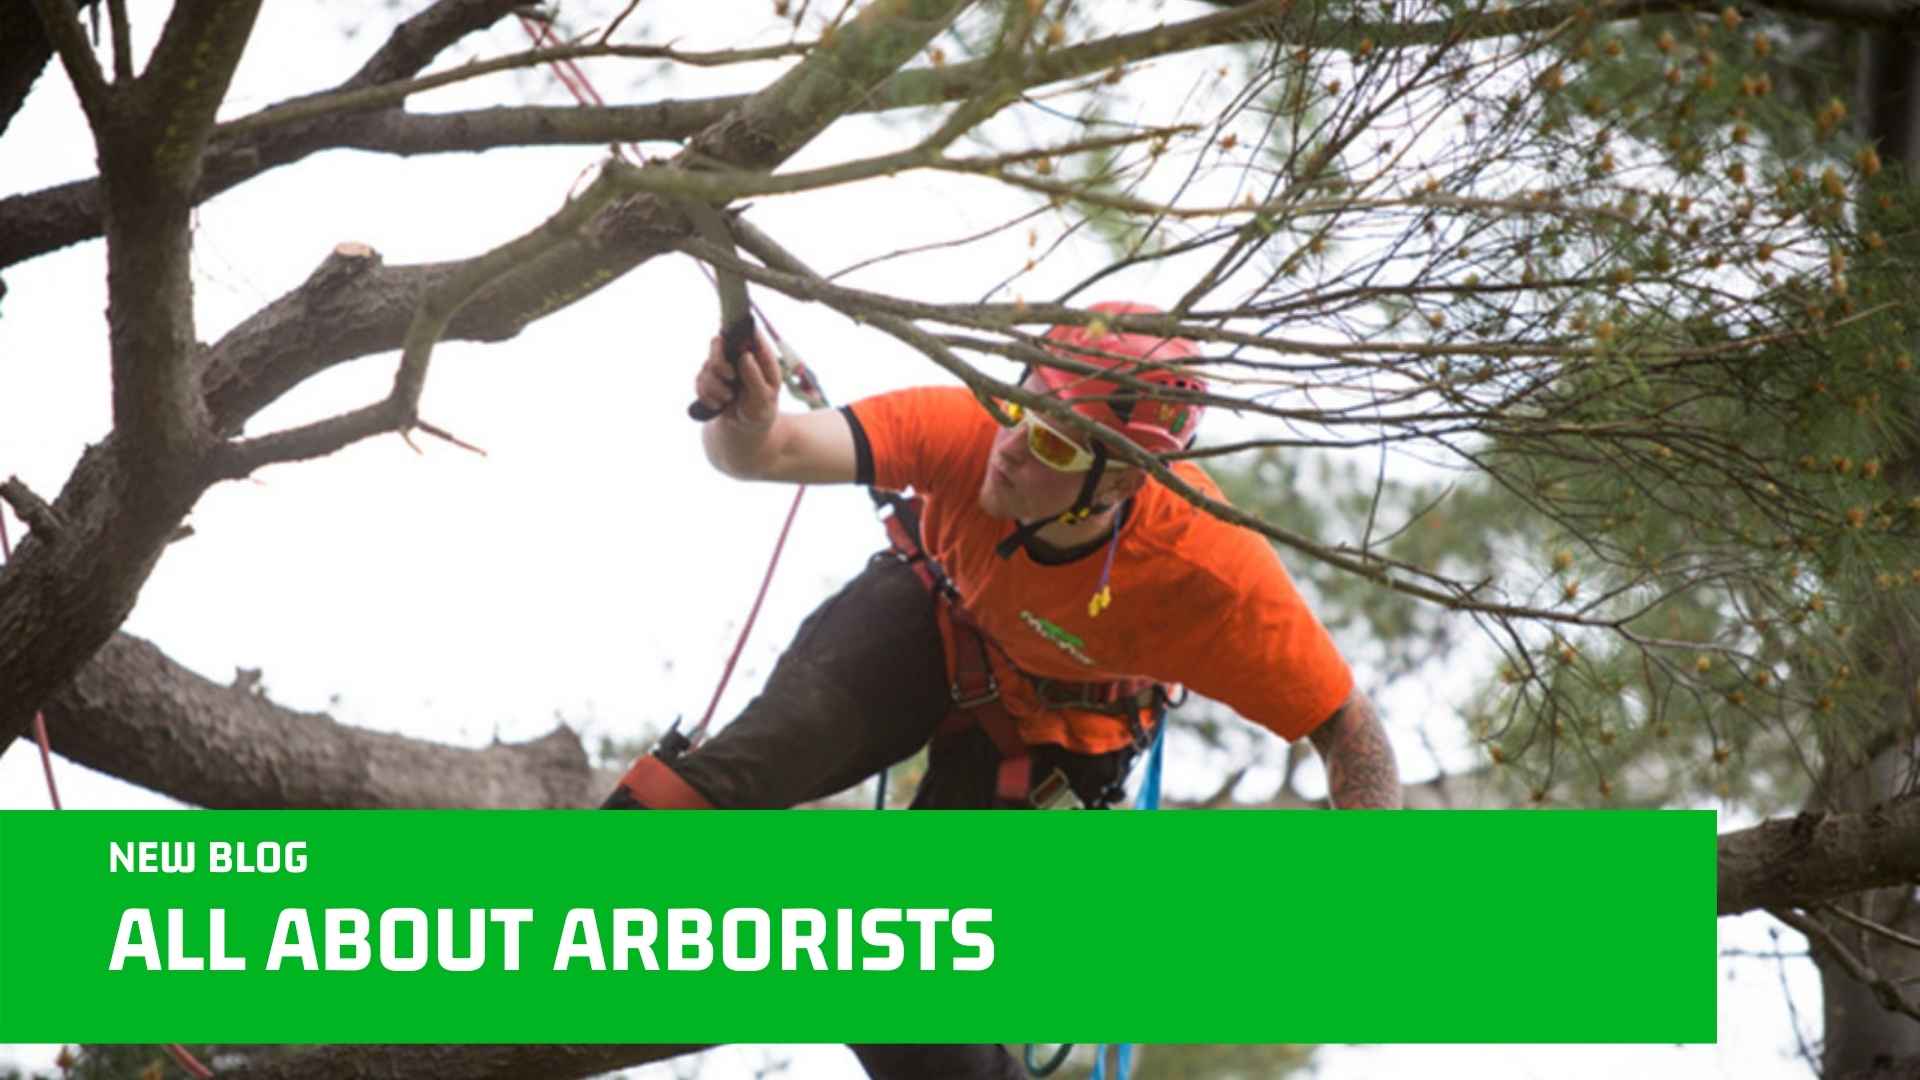 Arborist Test Their Skills at Tree Climbing